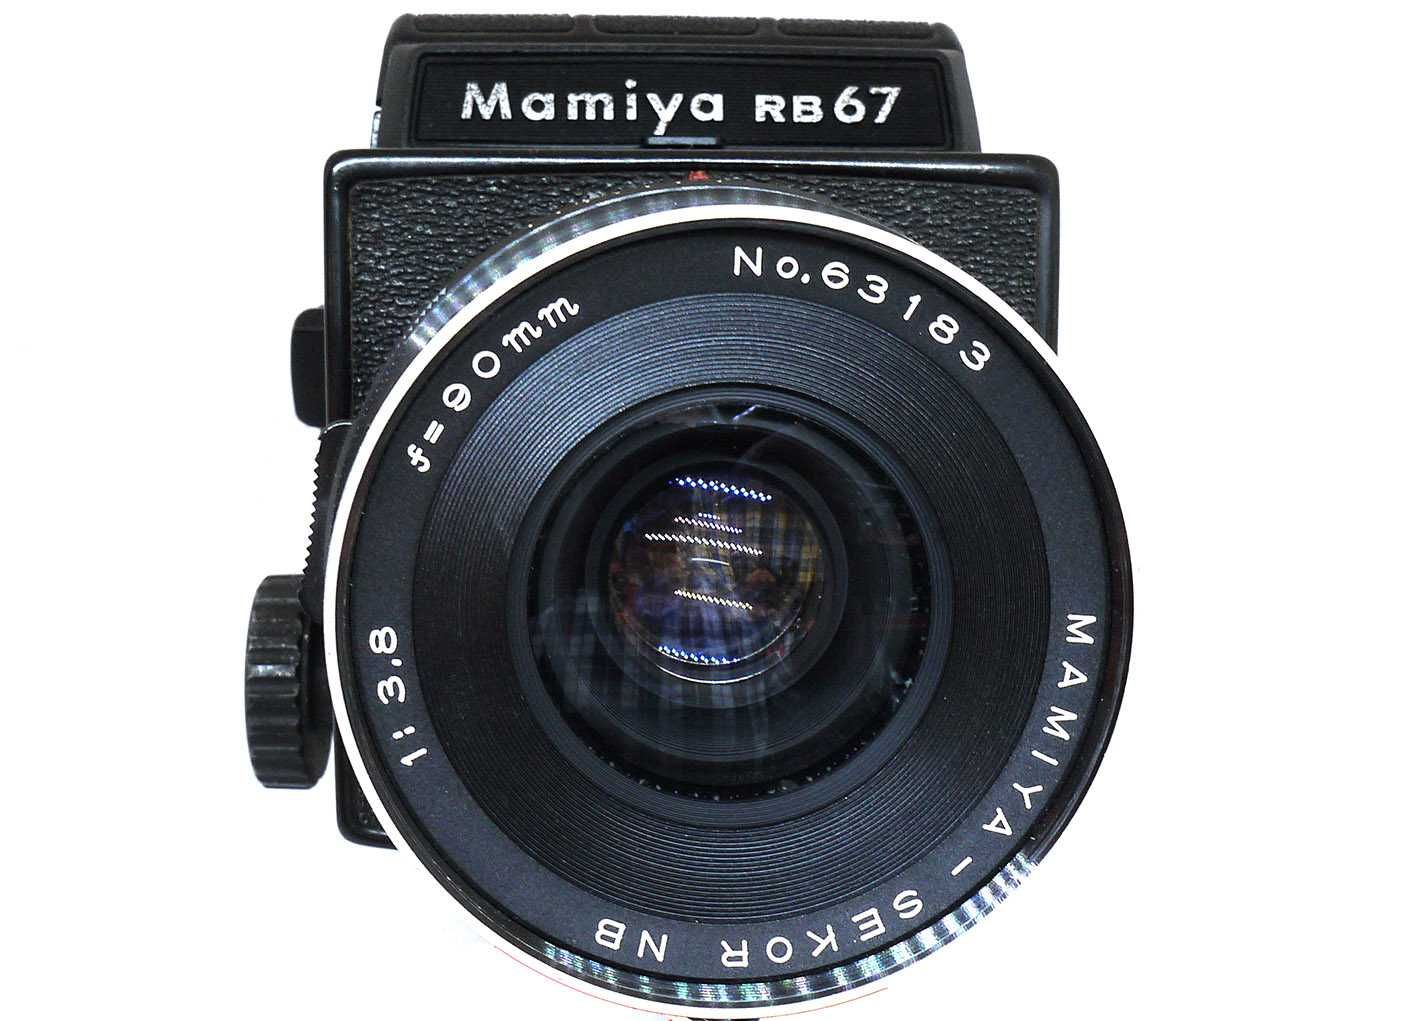 Mamiya RB 67 completa com objetiva 90mm